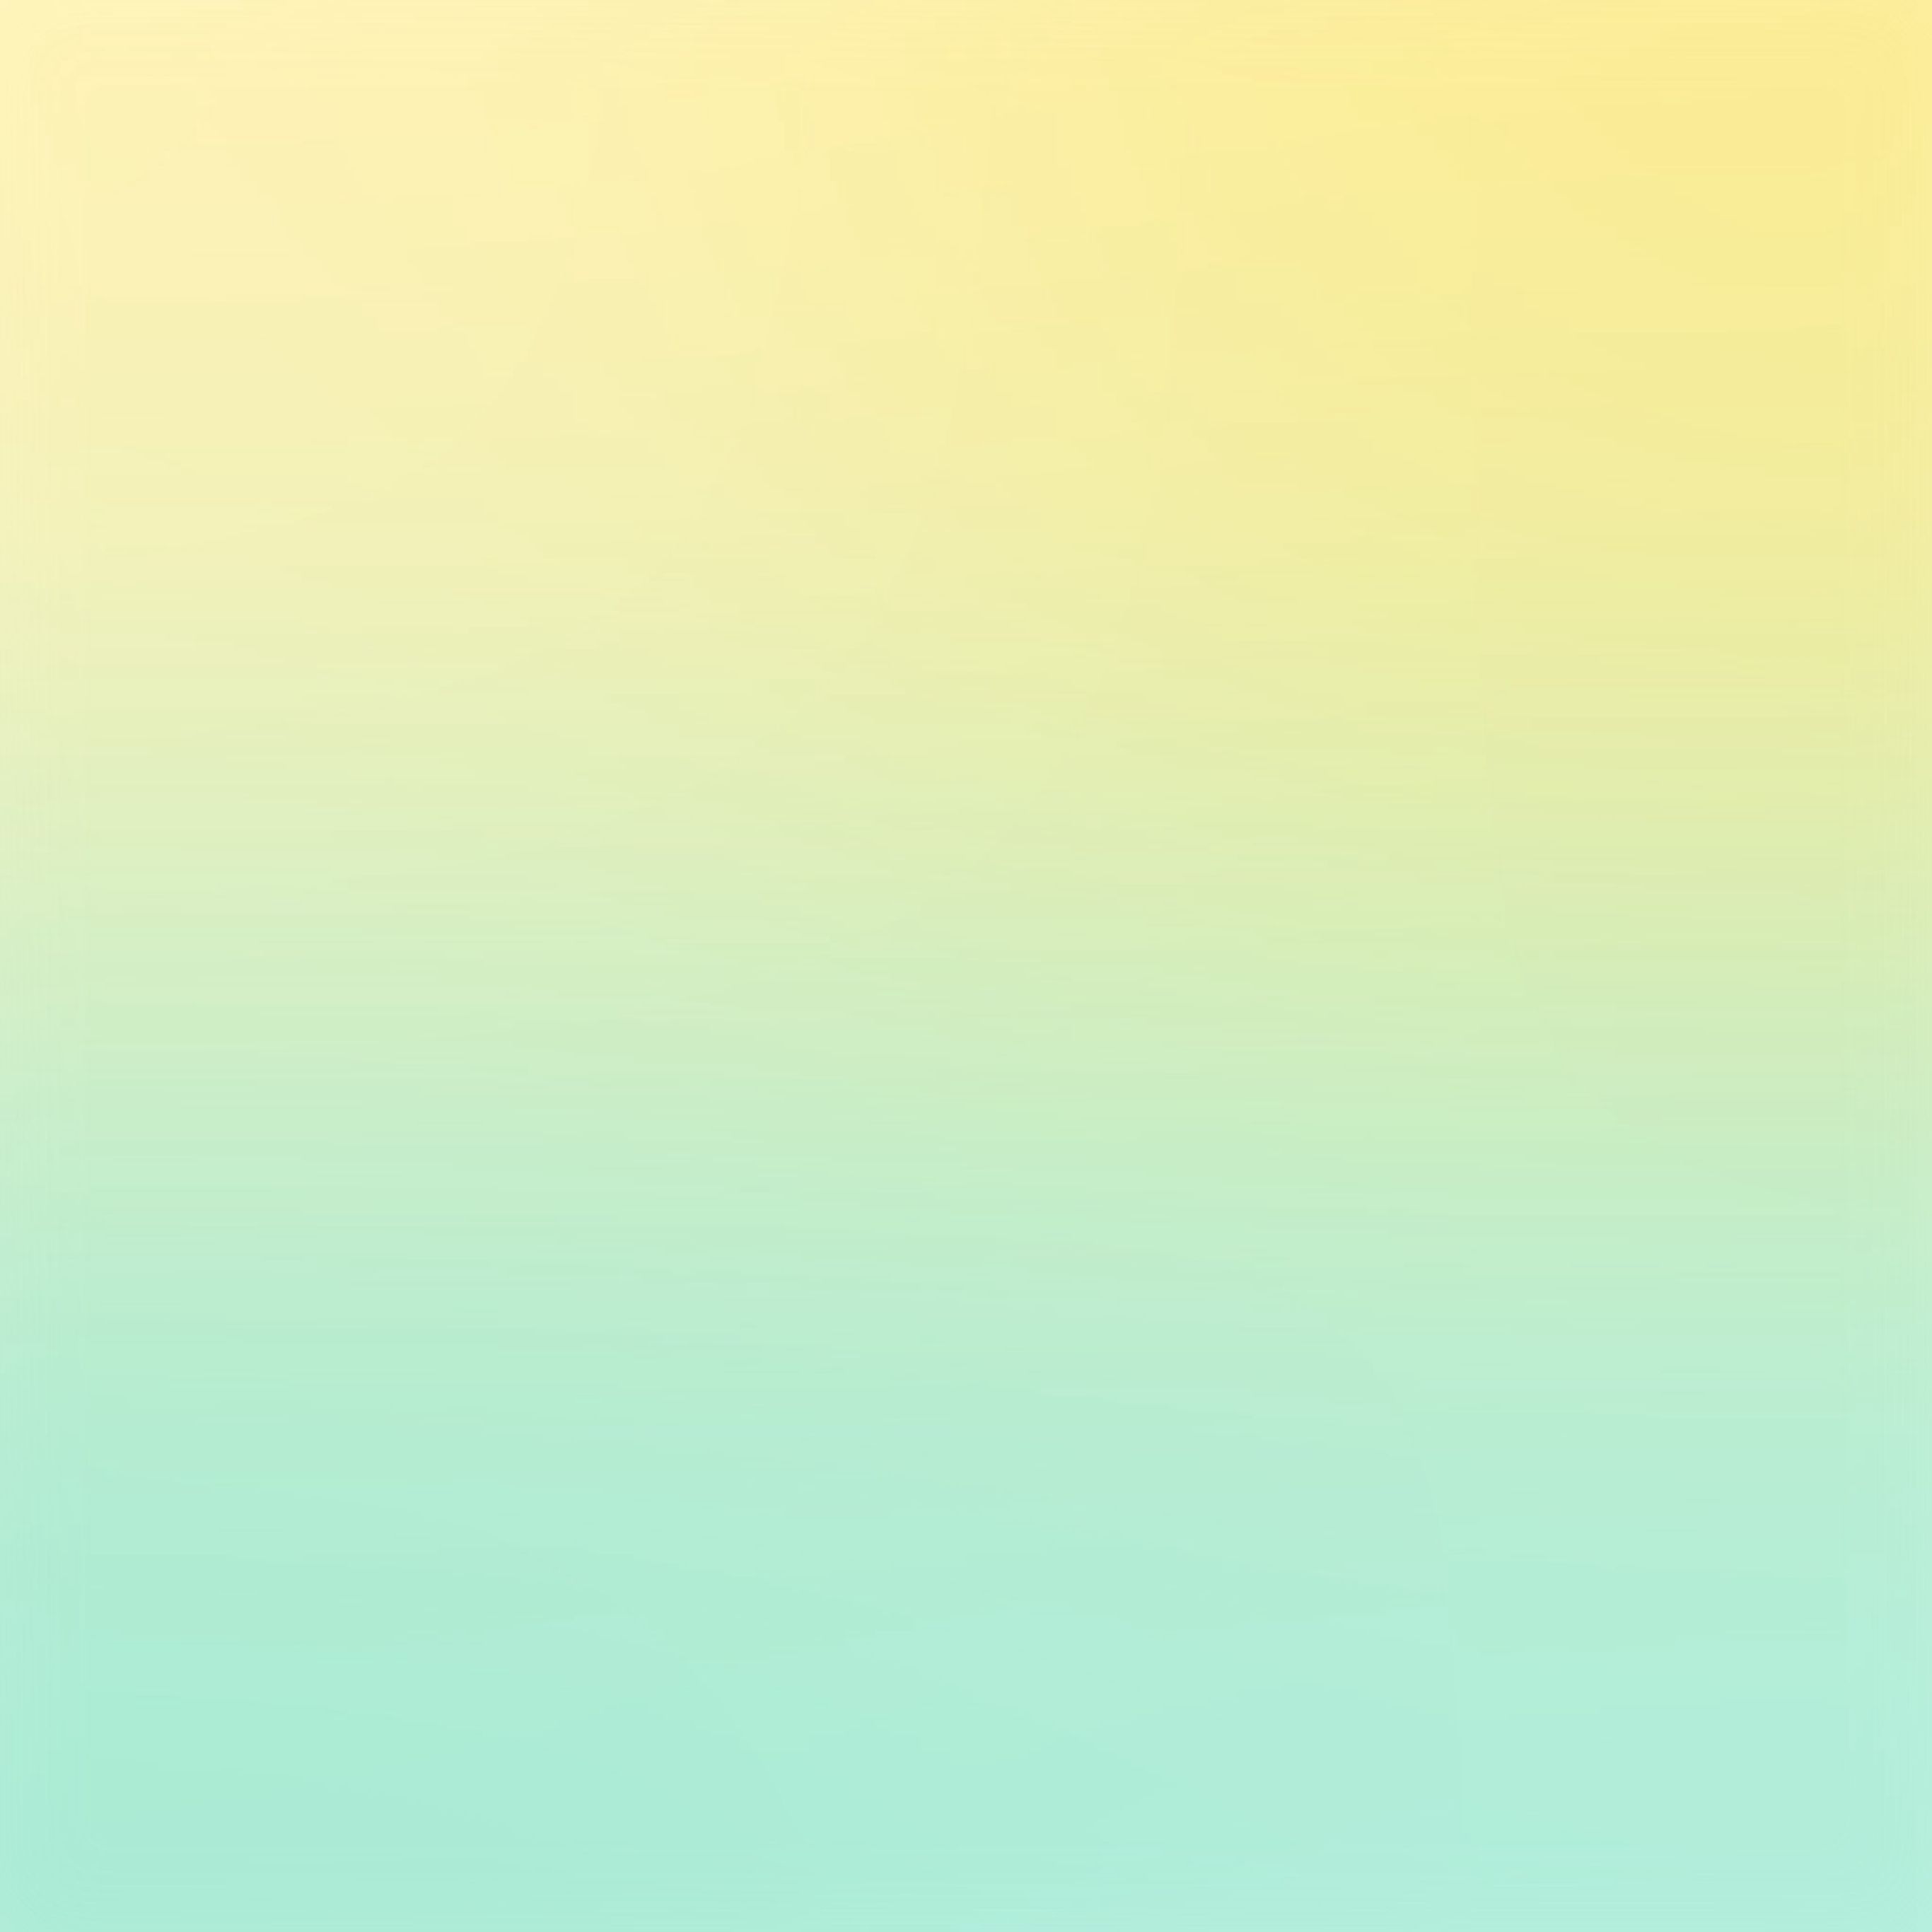 Yellow Green Pastel Blur Gradation iPad Pro Wallpaper Free Download